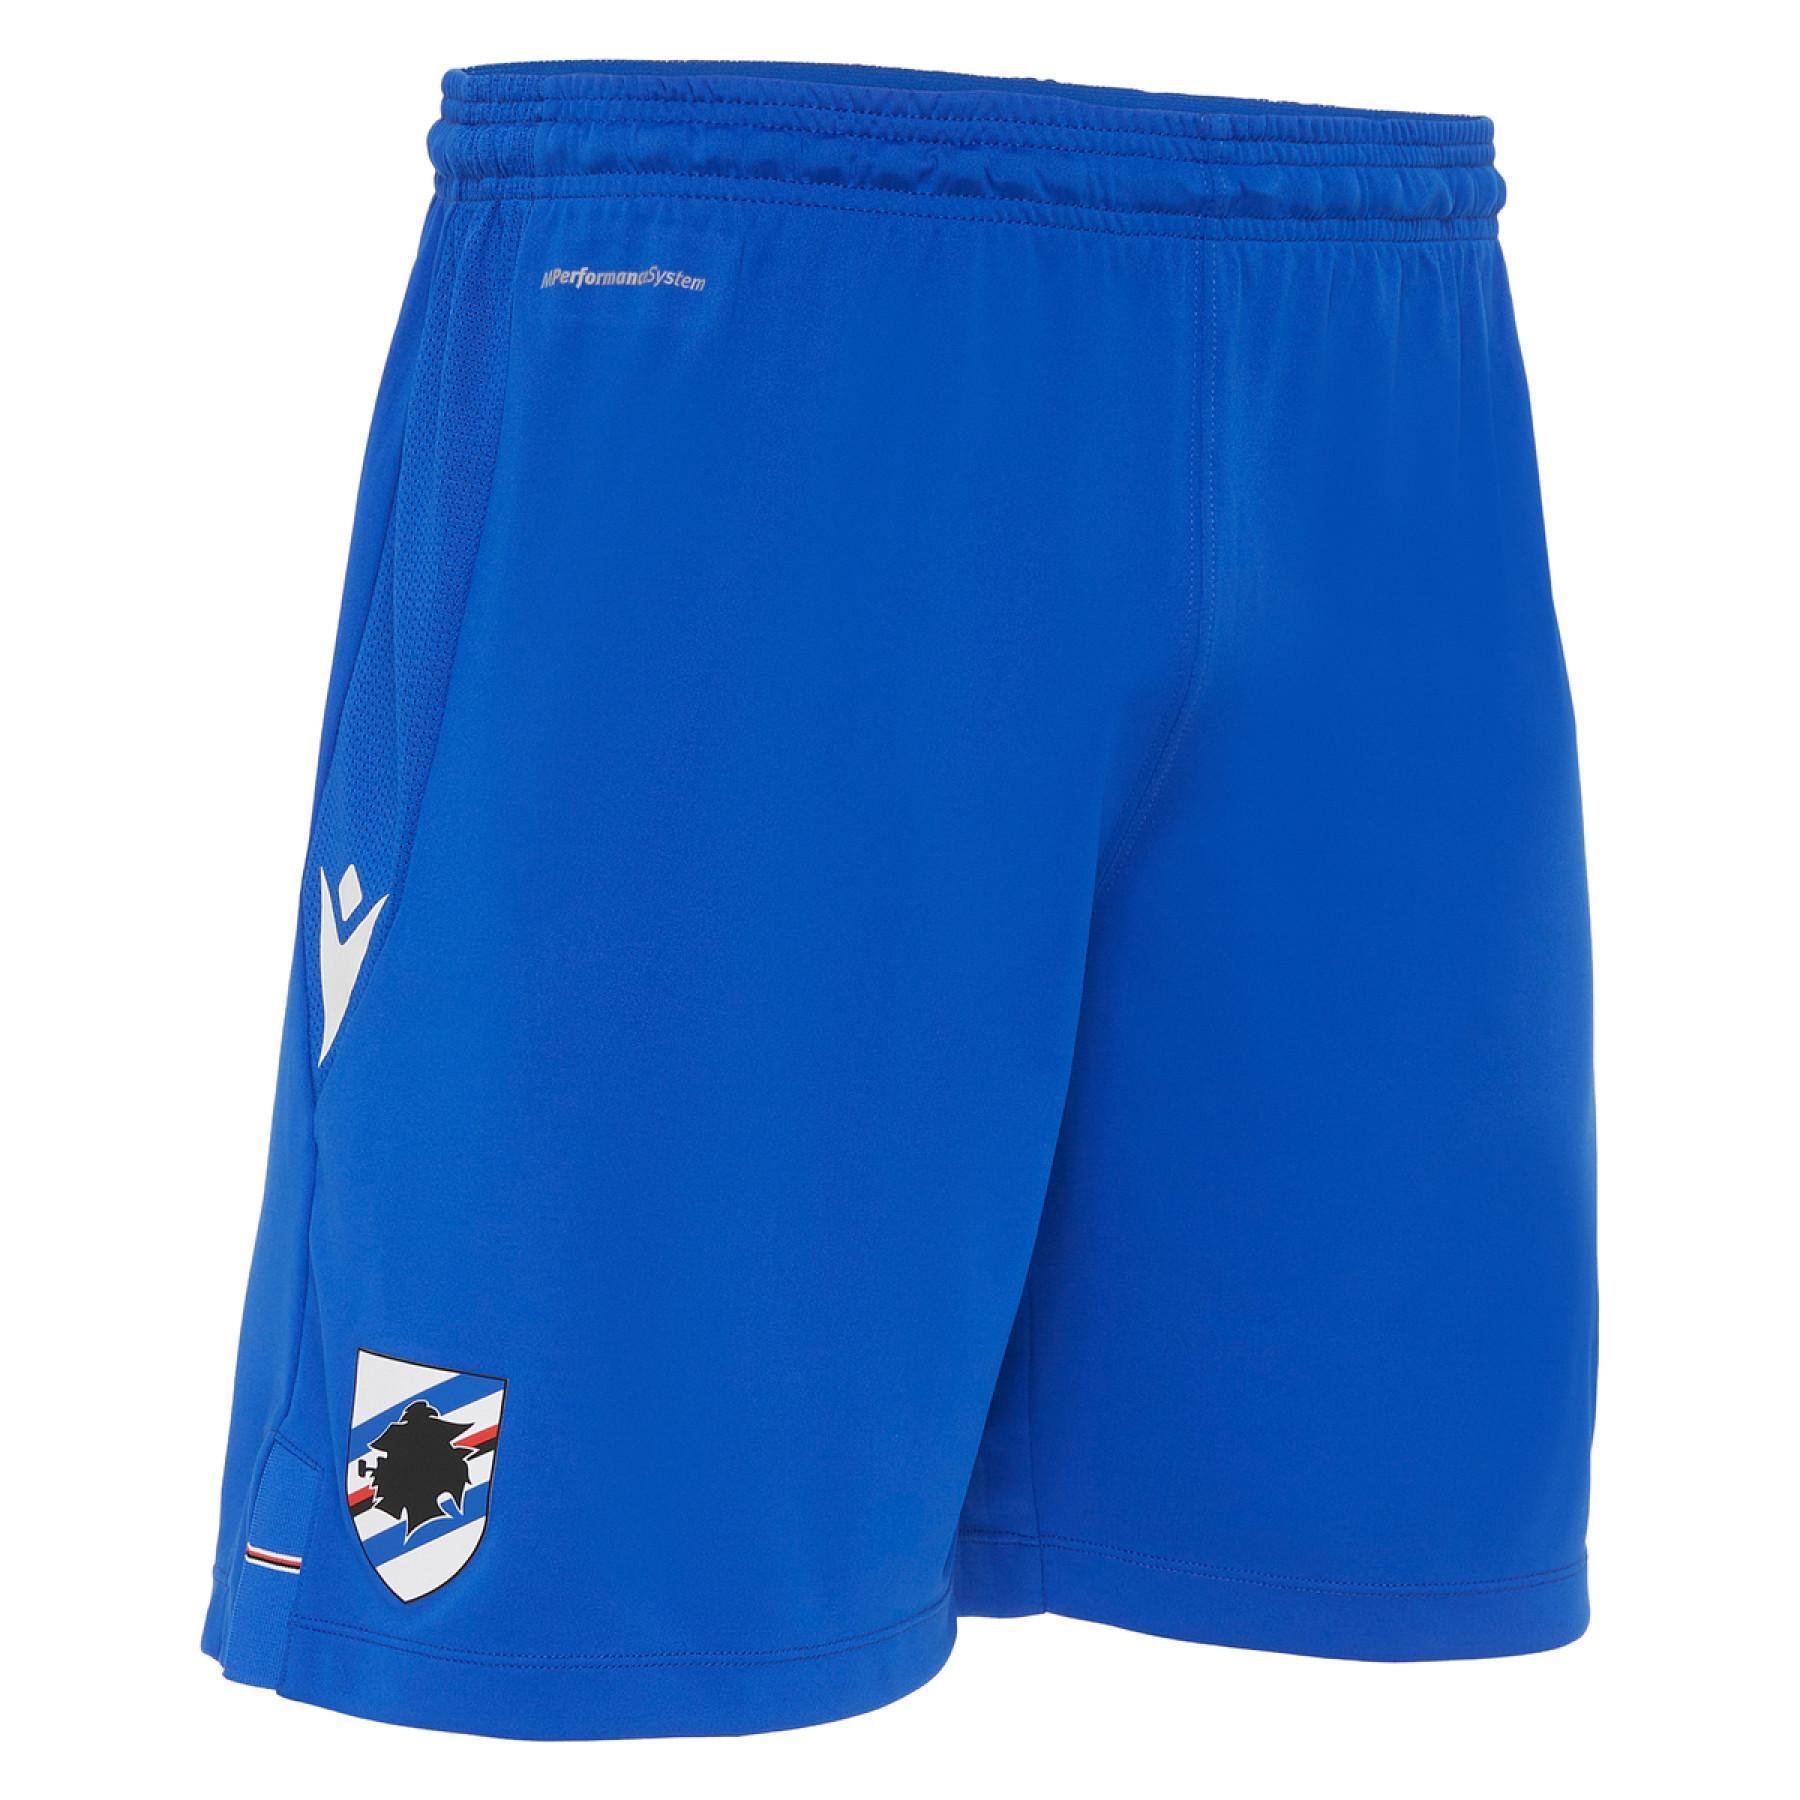 Pantalones cortos de exterior uc sampdoria 2020/21